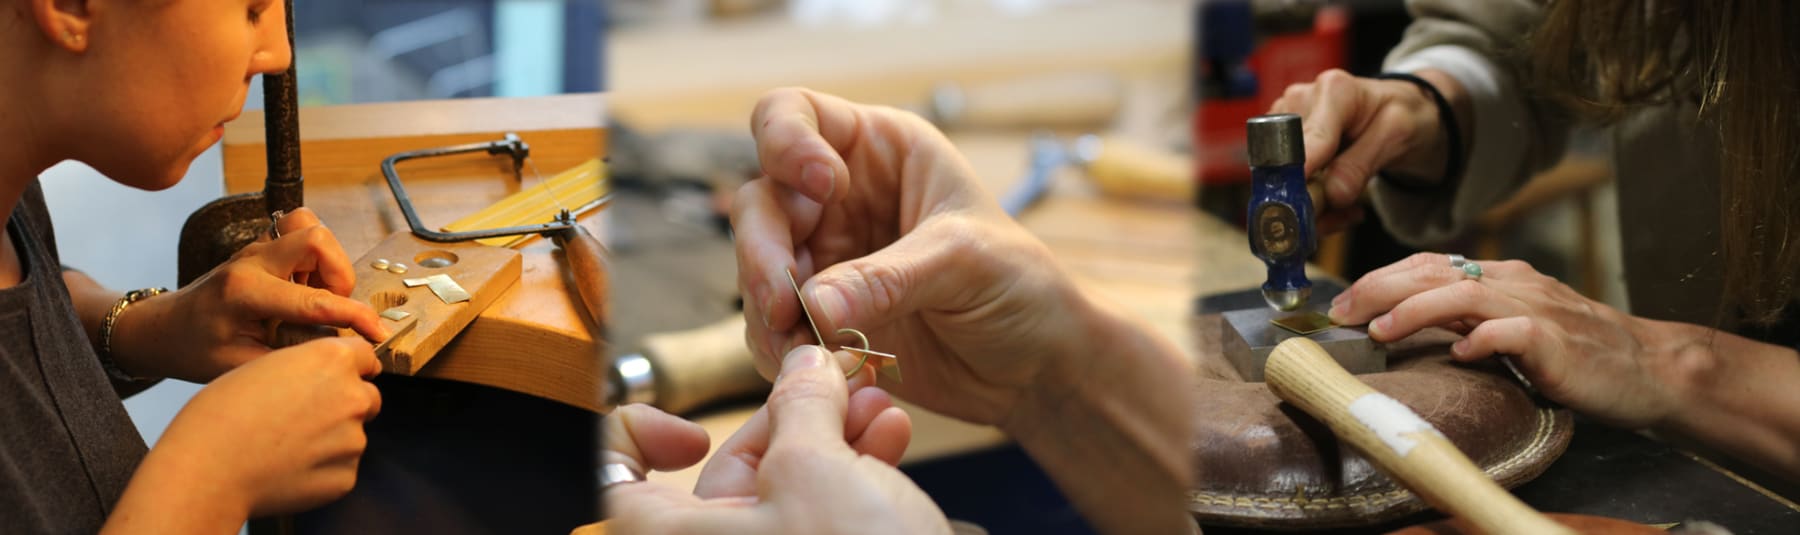 Students making jewellery